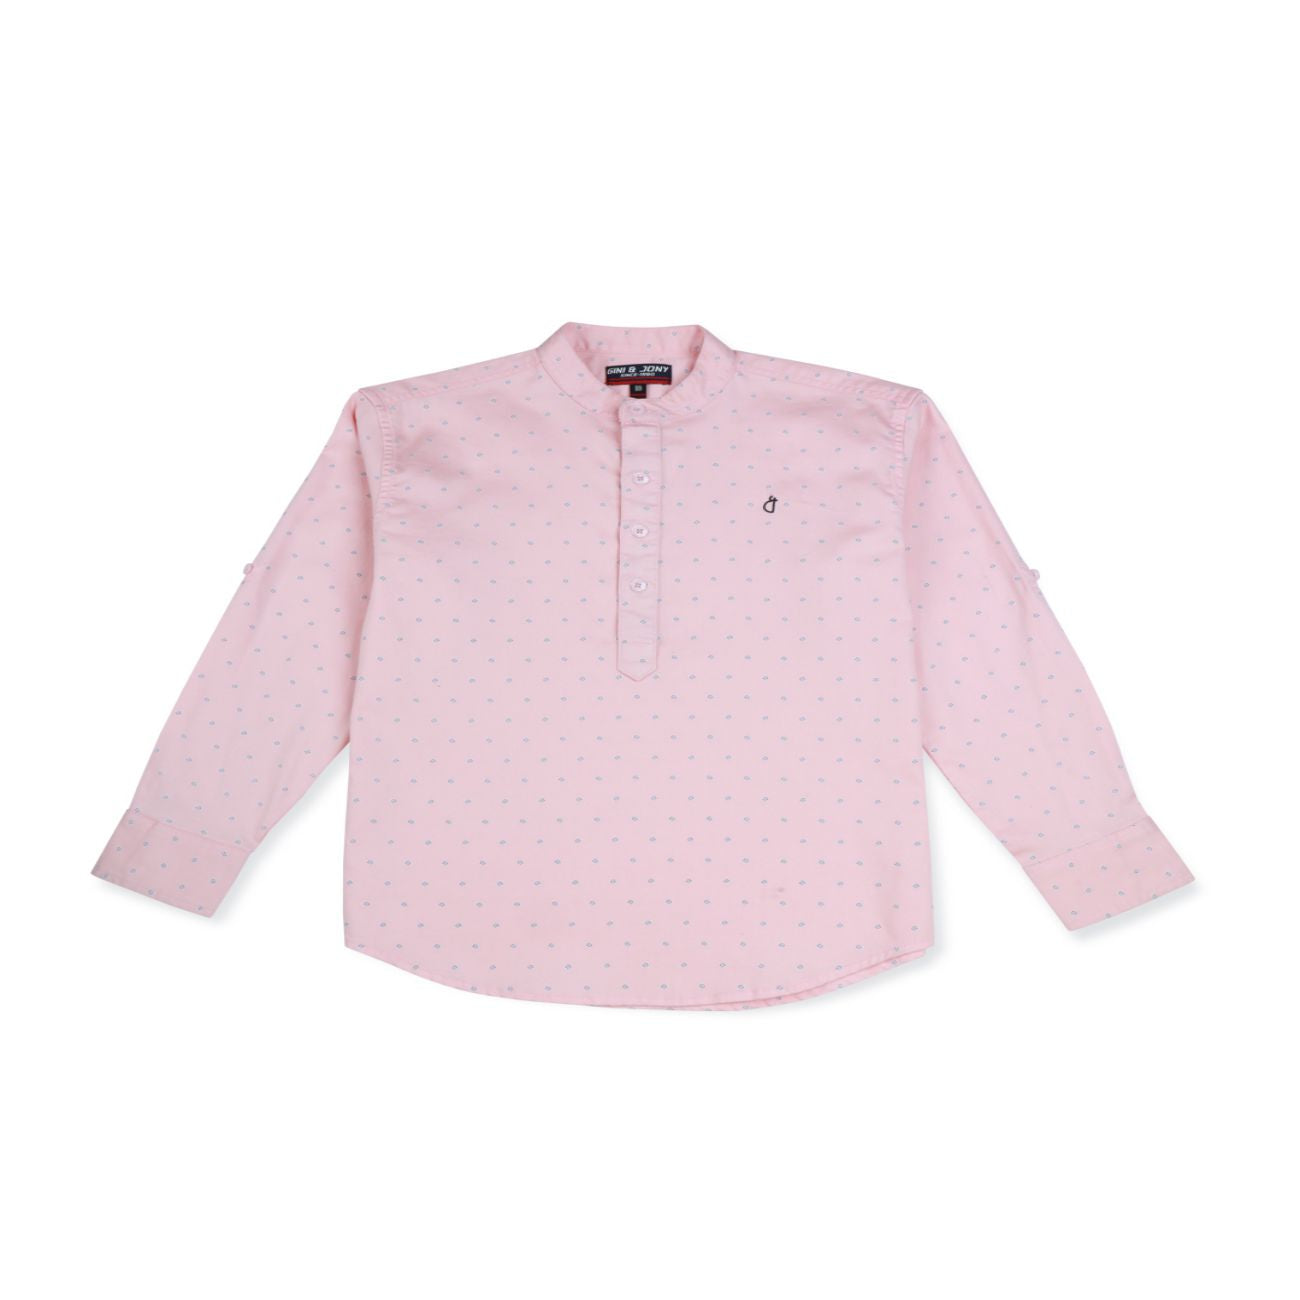 Boys Pink Cotton Printed Full Sleeves Shirt